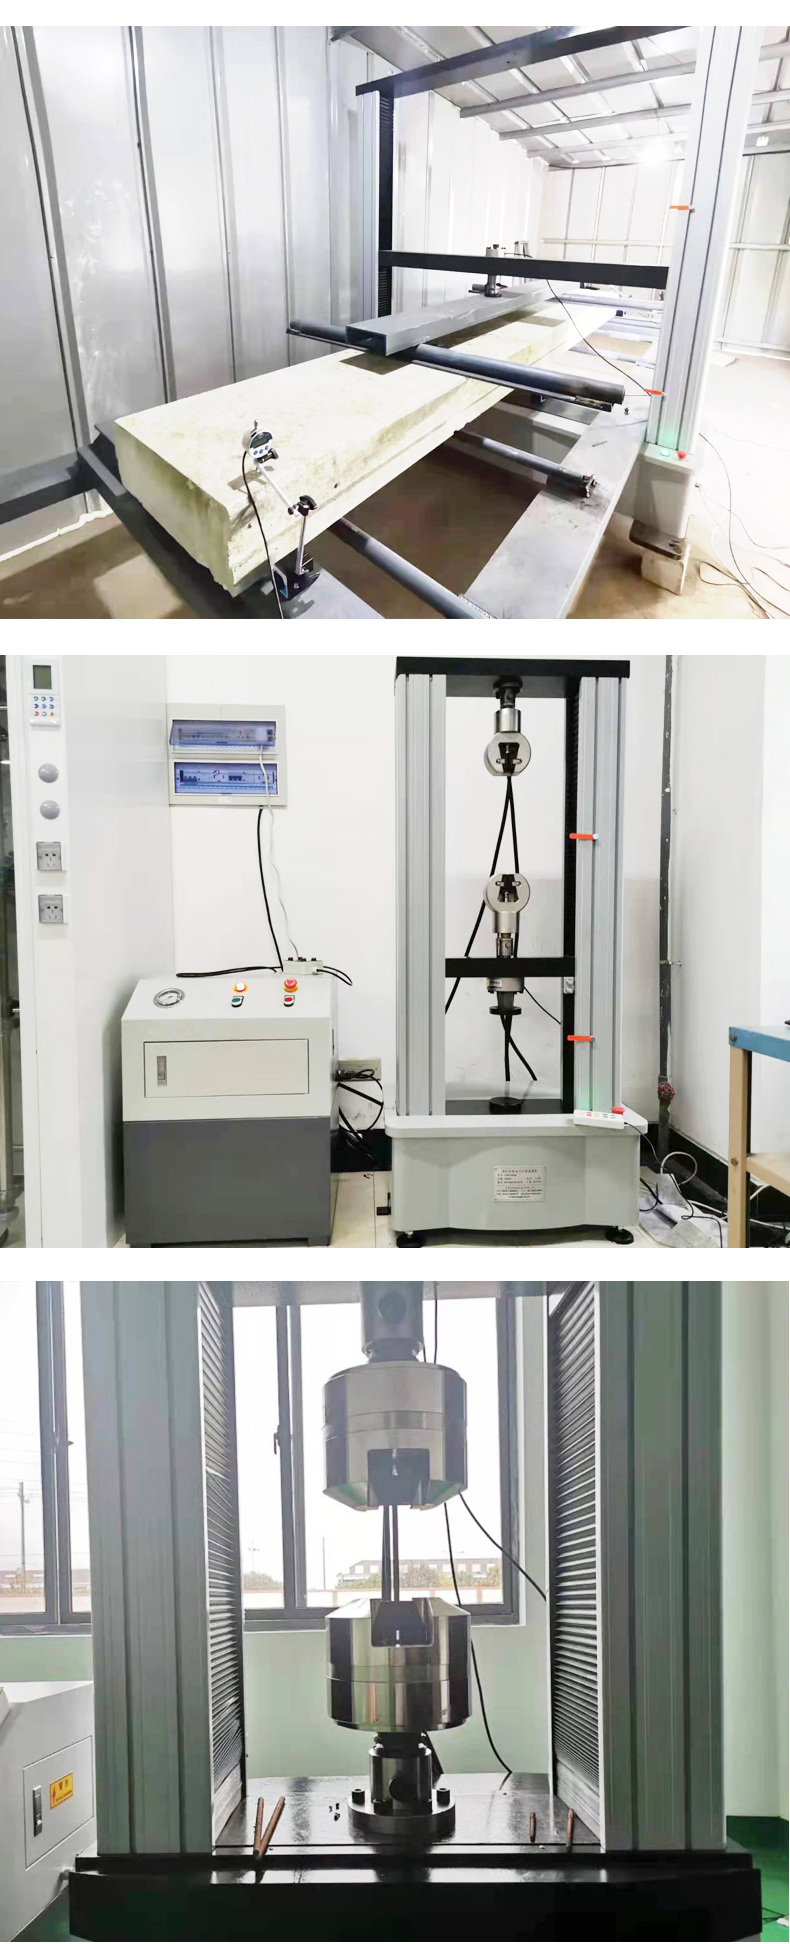 Ceramic tile joint filler bending and compressive strength testing machine, experimental instrument, testing machine